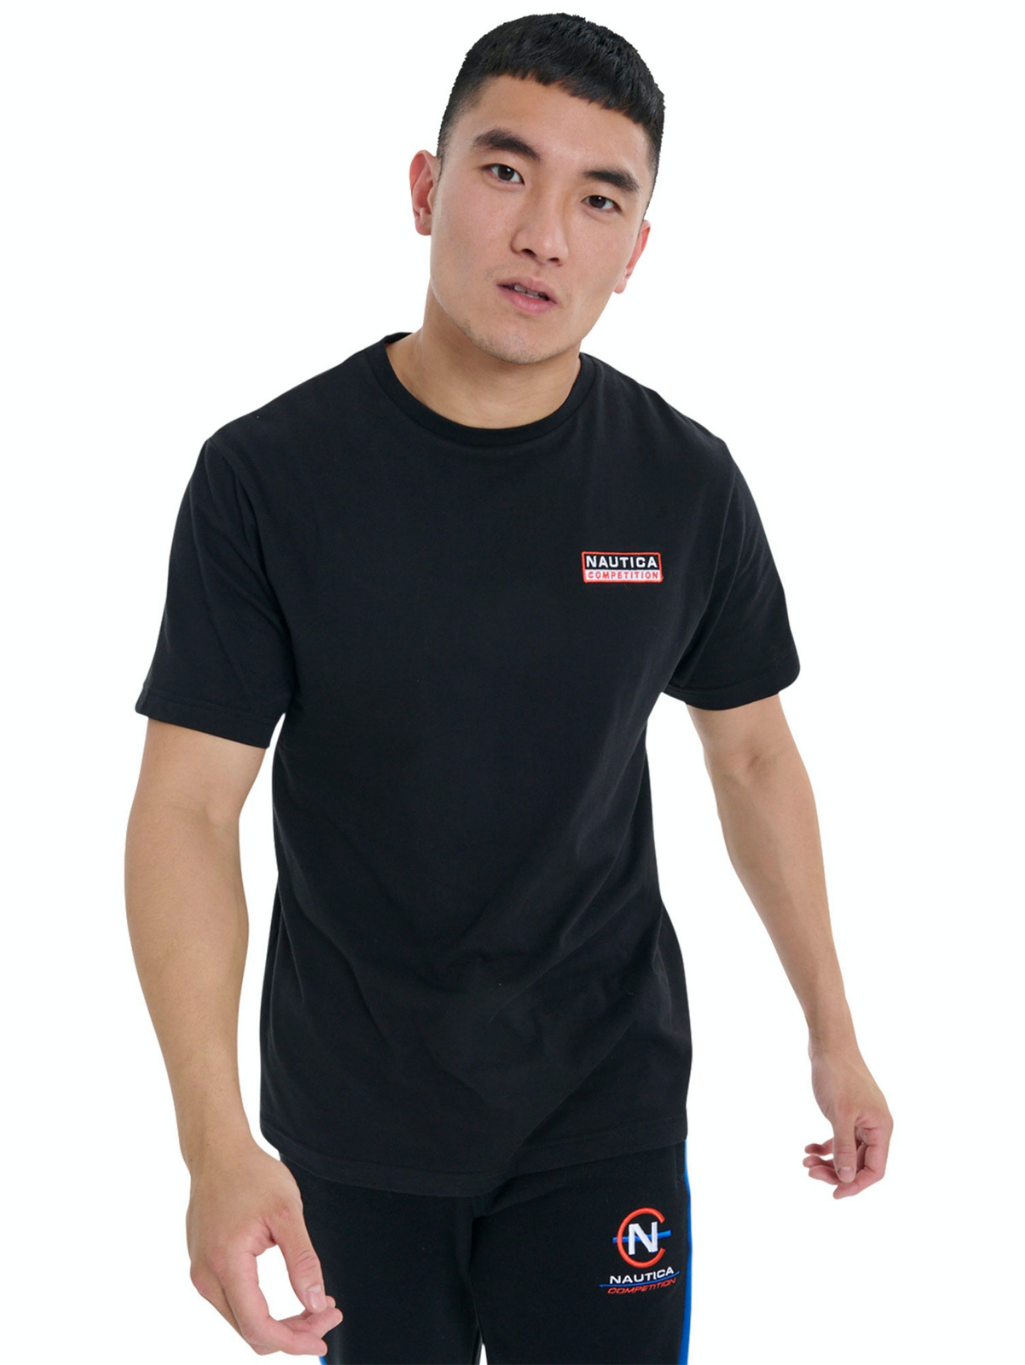 Nautica Trim T-Shirt Black